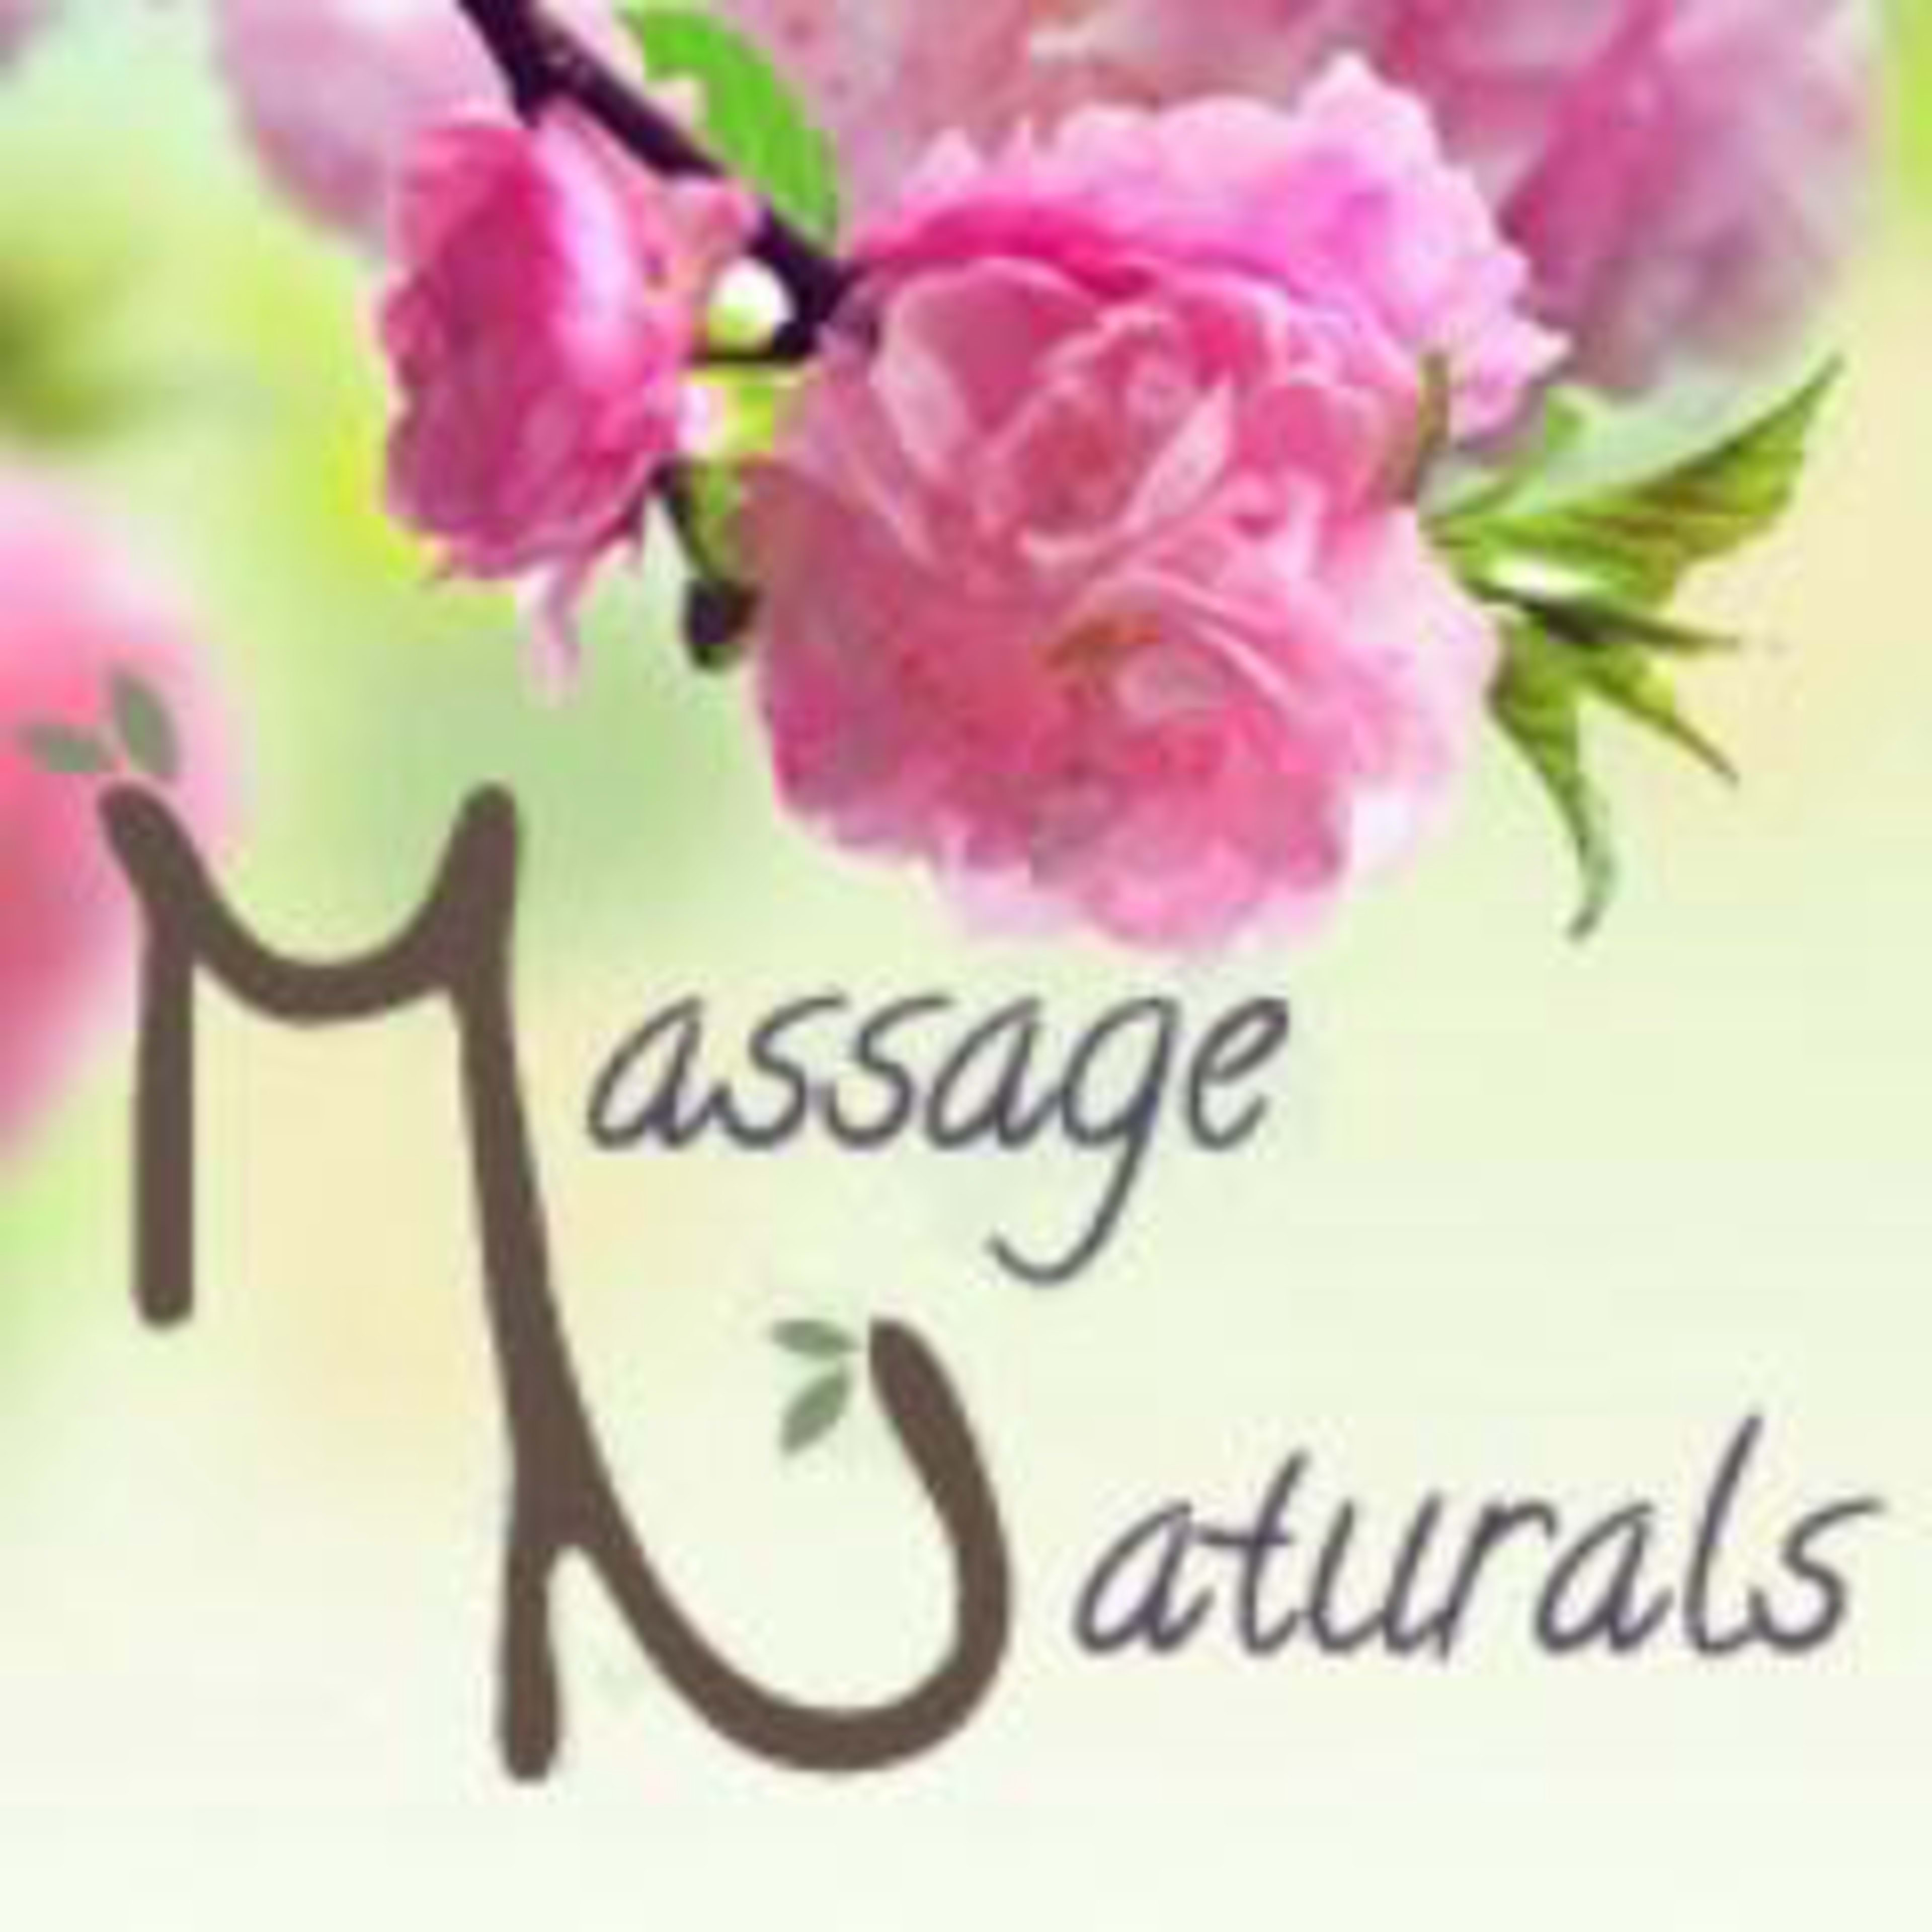 Massage NaturalsCode